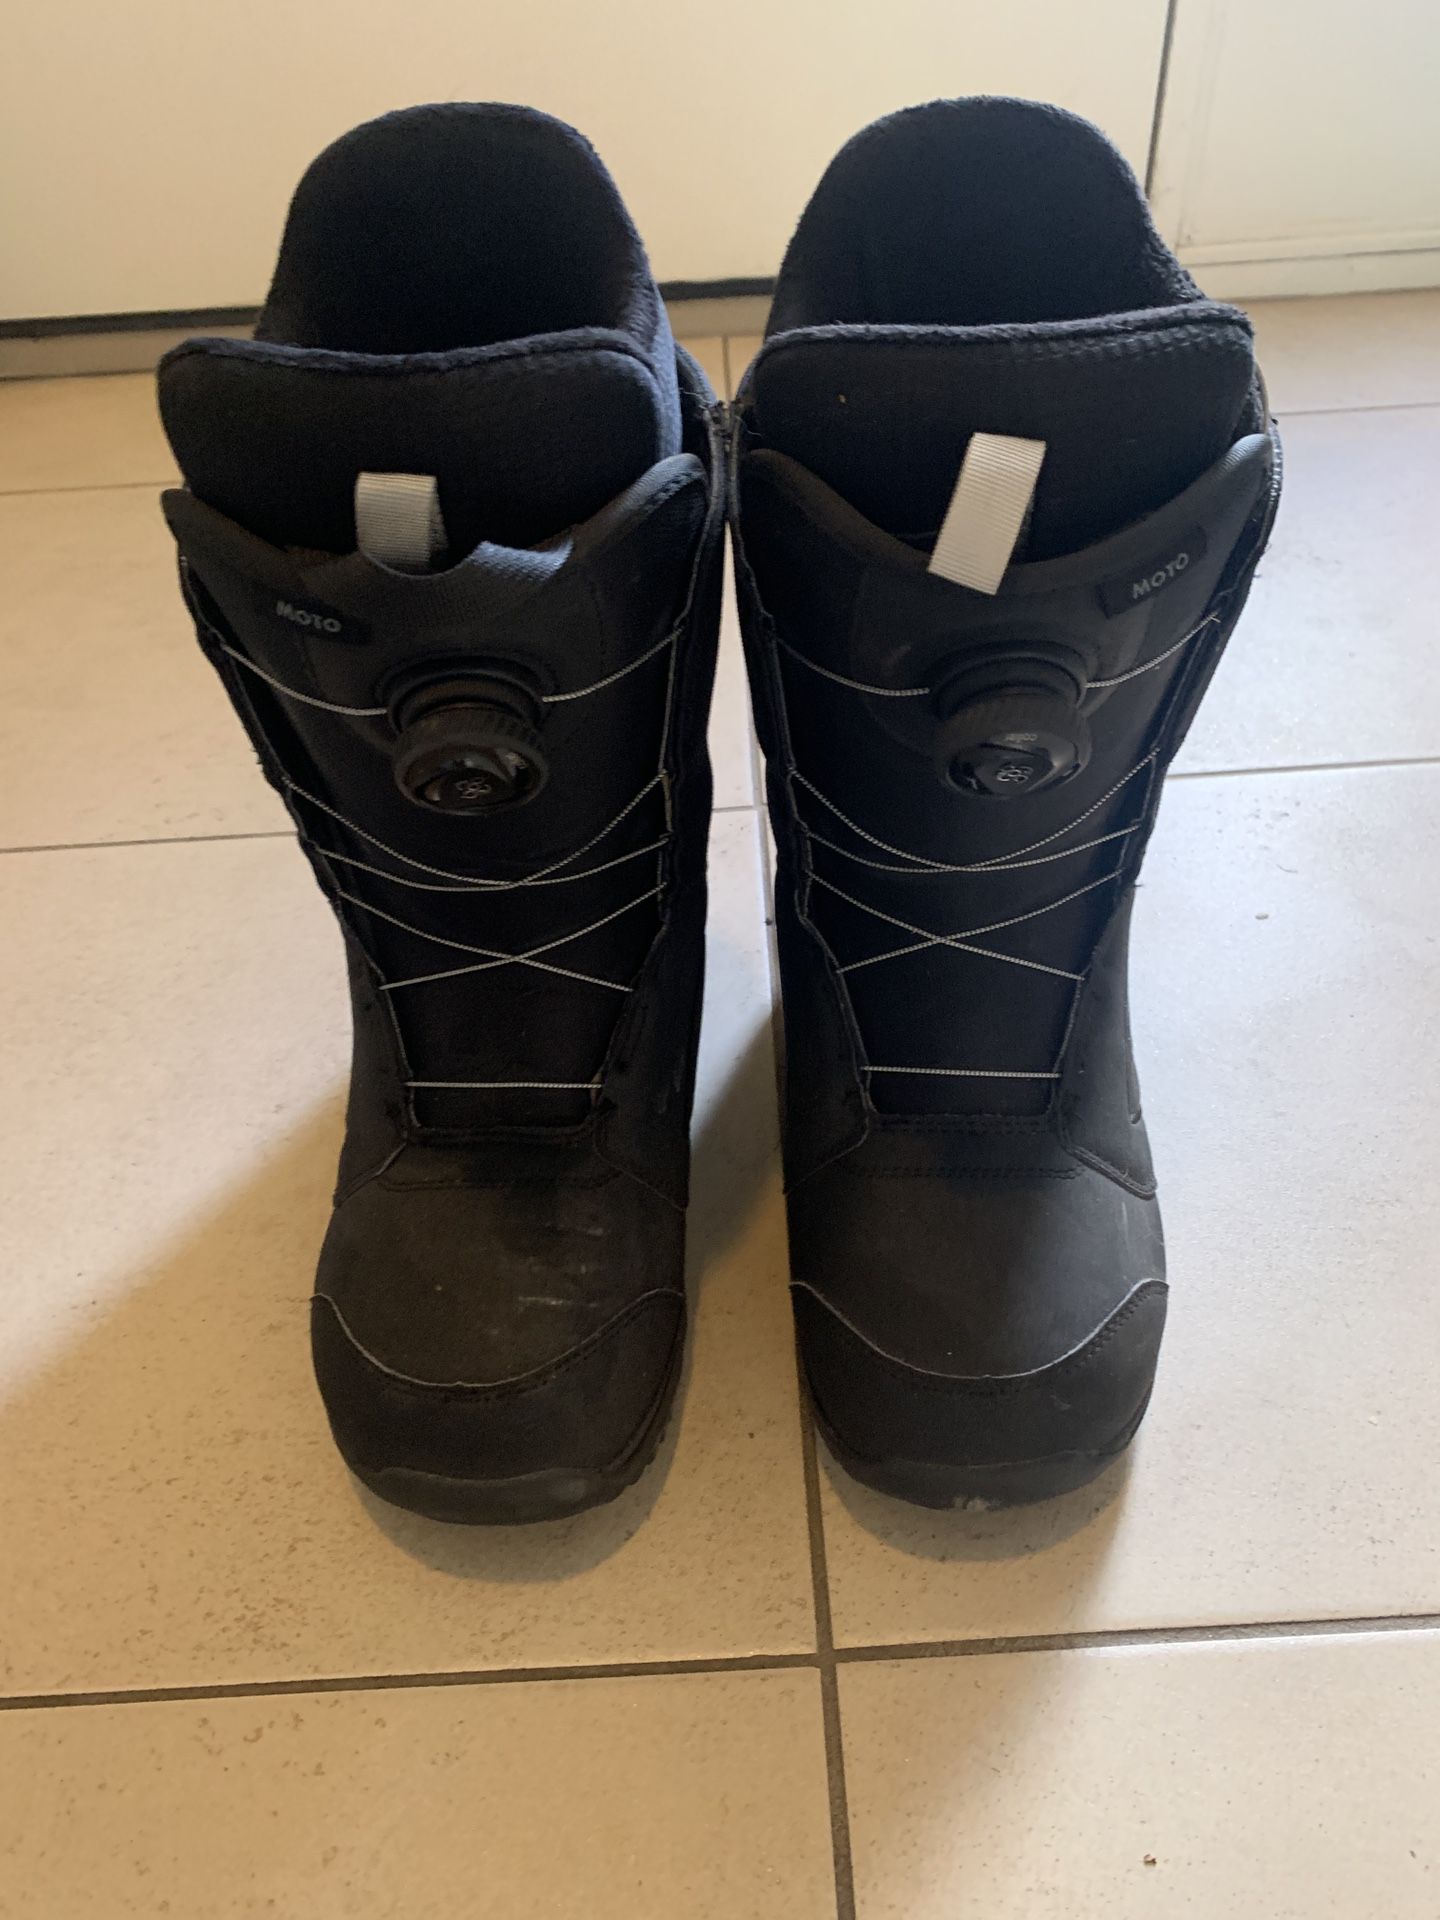 Burton Snowboarding Boots